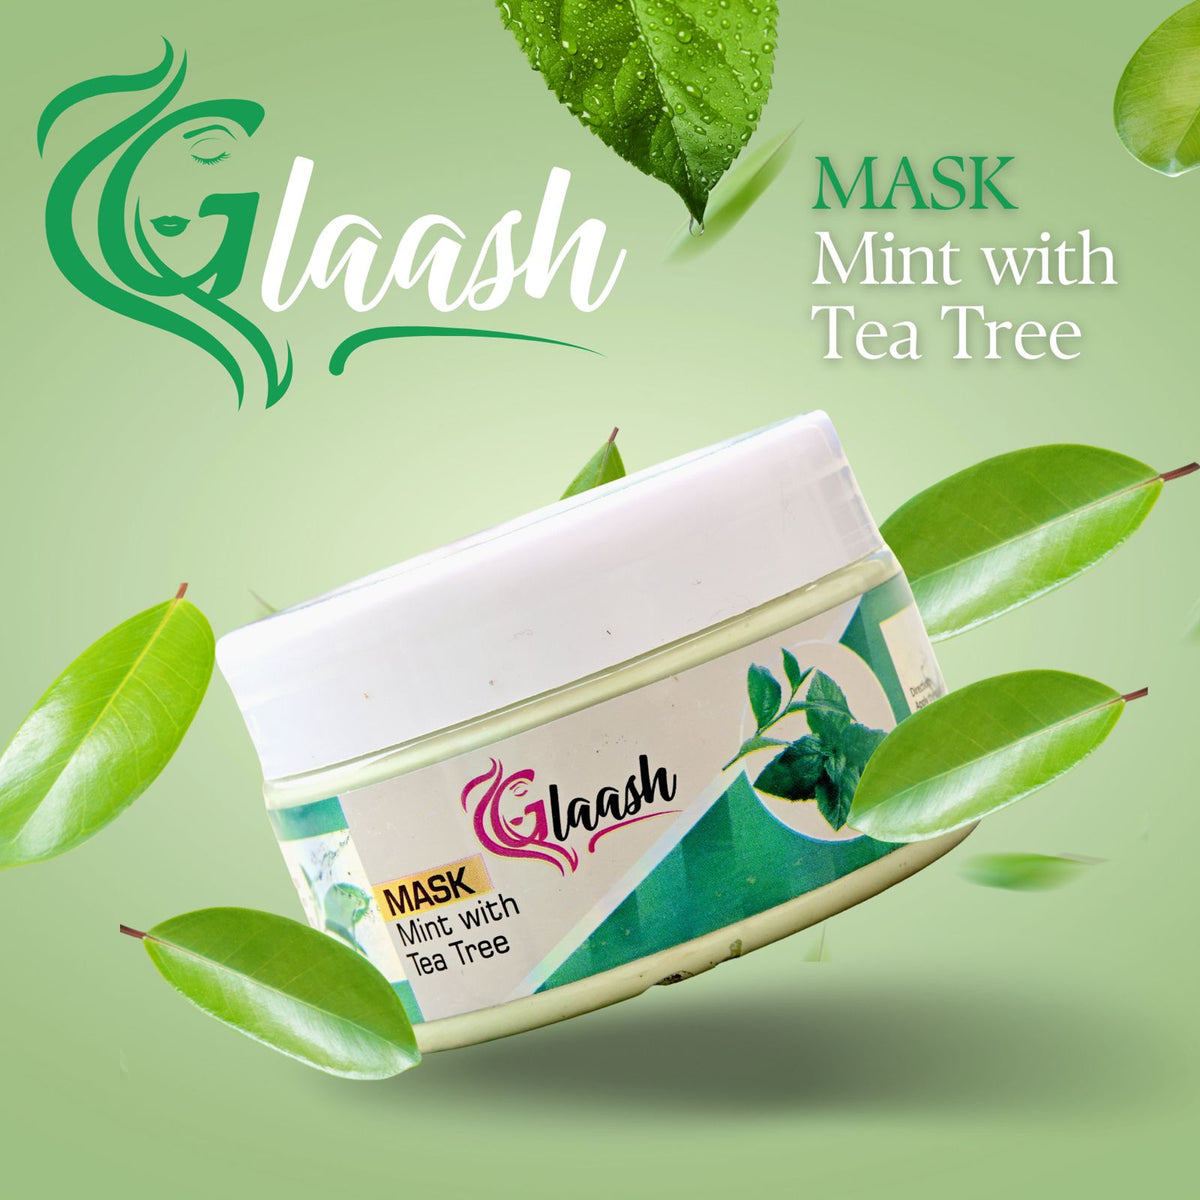 Mask Mint with Tea Tree